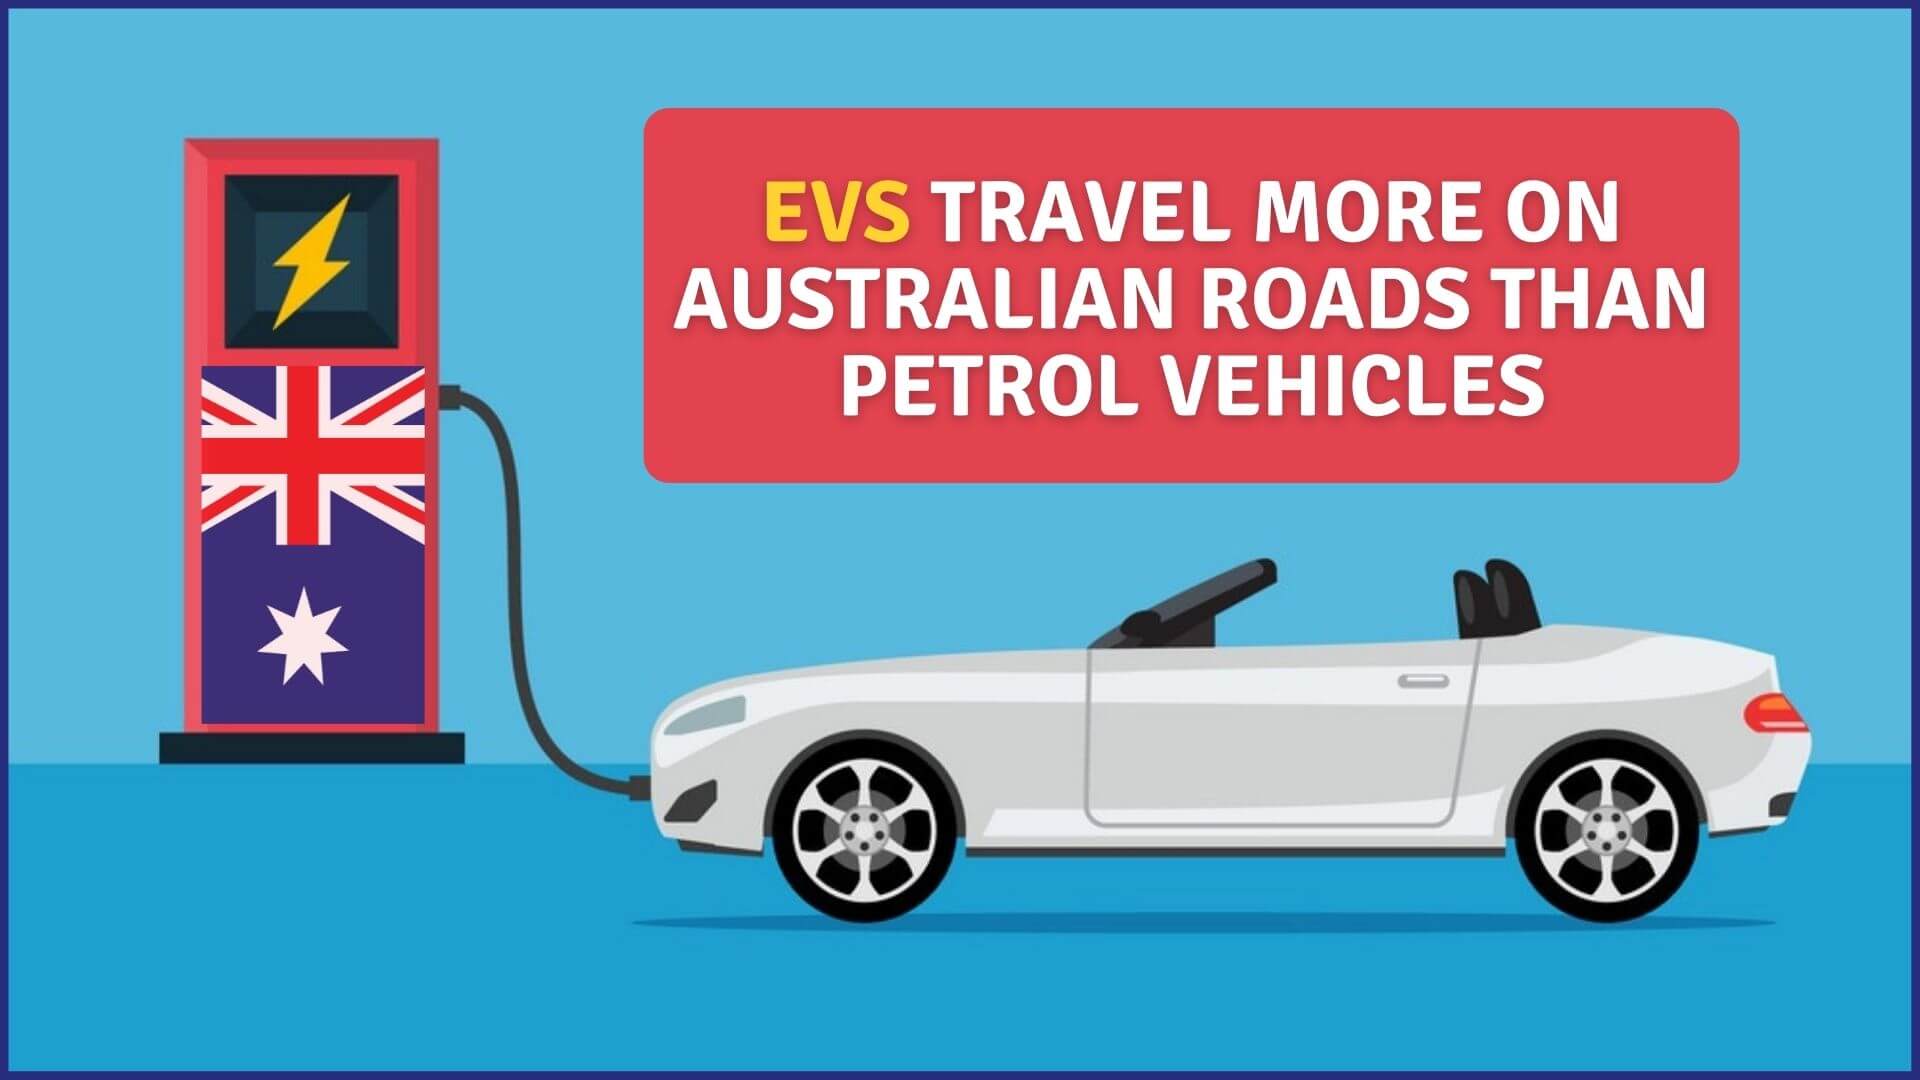 https://e-vehicleinfo.com/evs-travel-more-on-australian-roads-than-petrol-vehicles/